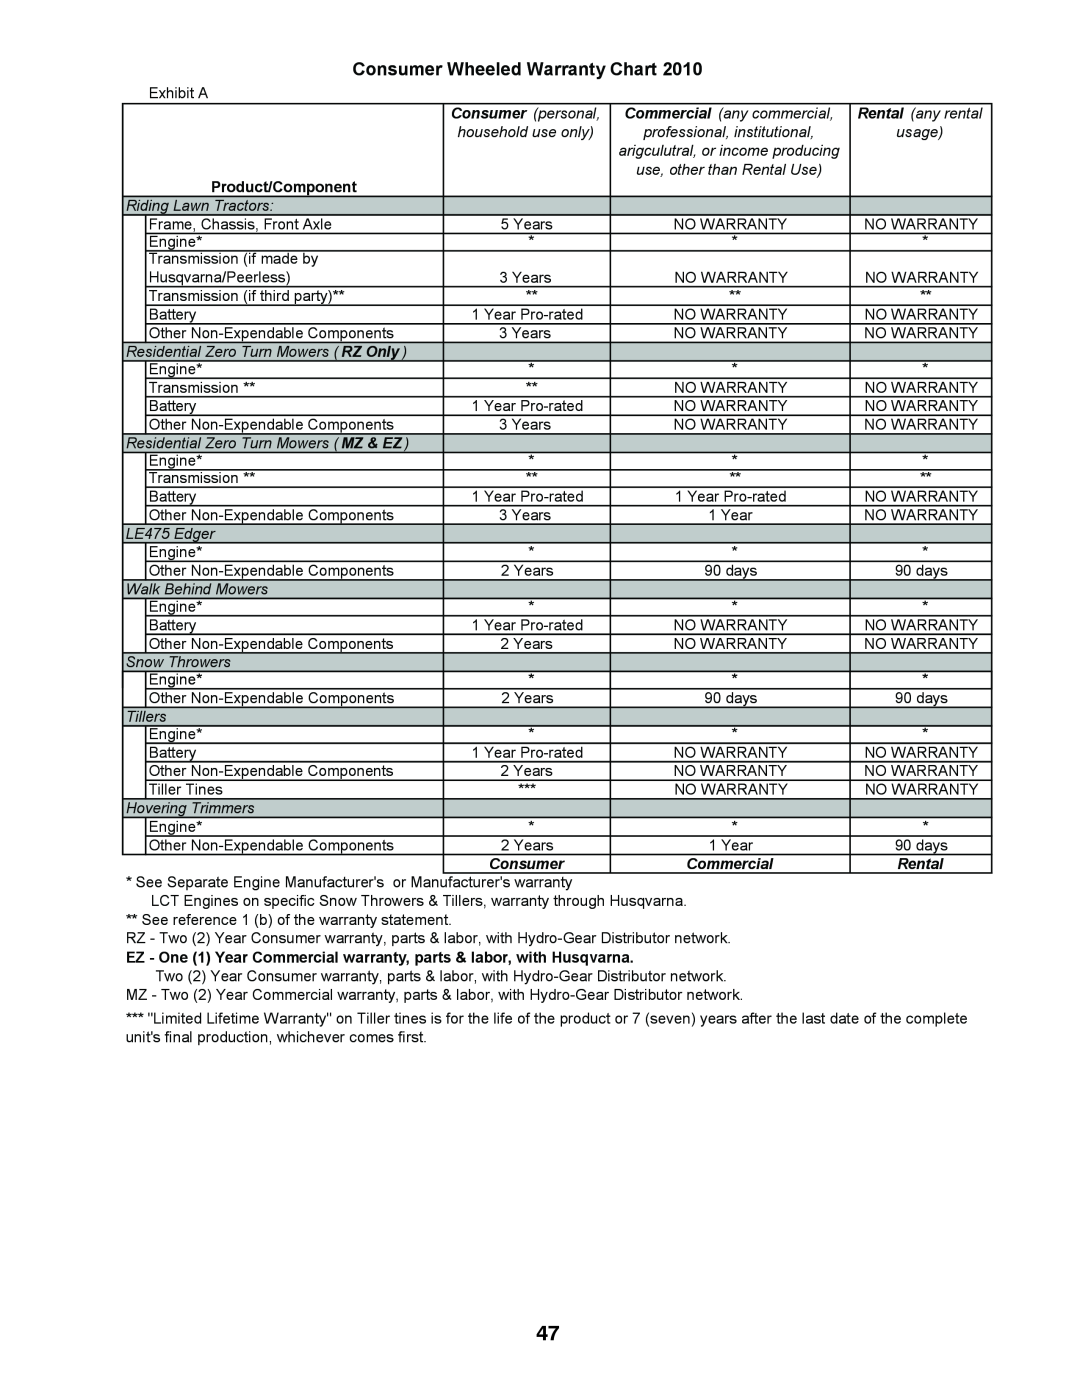 Husqvarna YTH26V54 owner manual Consumer Wheeled Warranty Chart, Product/Component, Qjlqh 